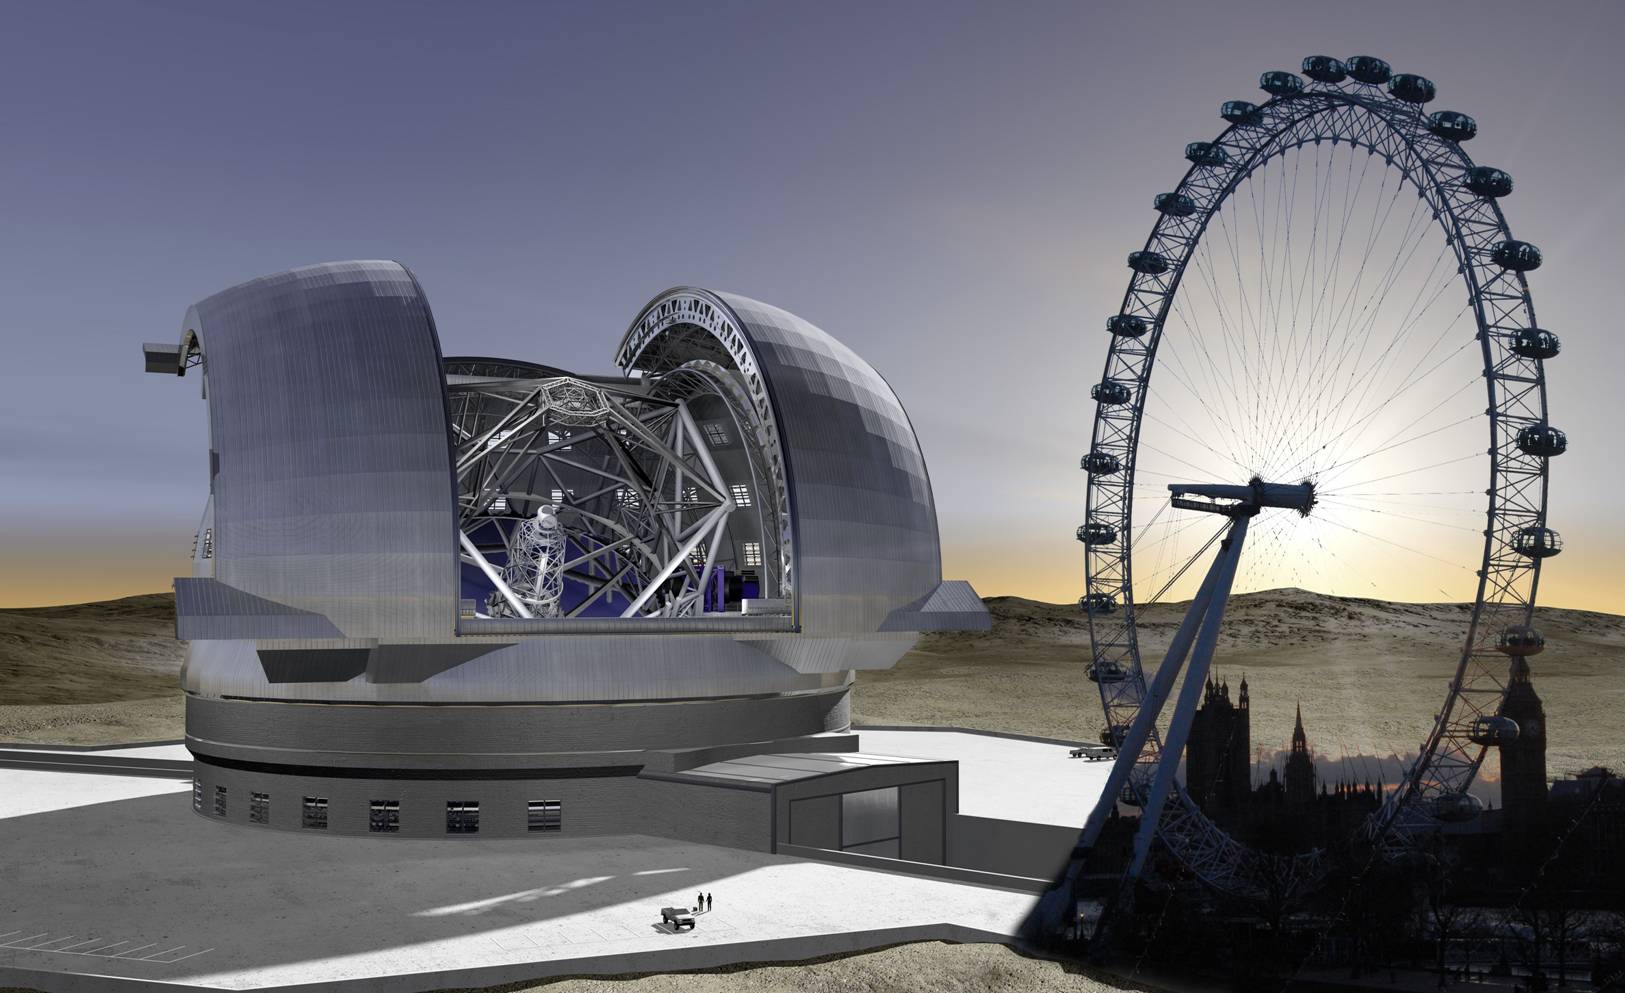 Preliminary E-ELT Concept Image with London Eye, courtesy of ESO/H. Zodet & STFC/Jason Cowan.